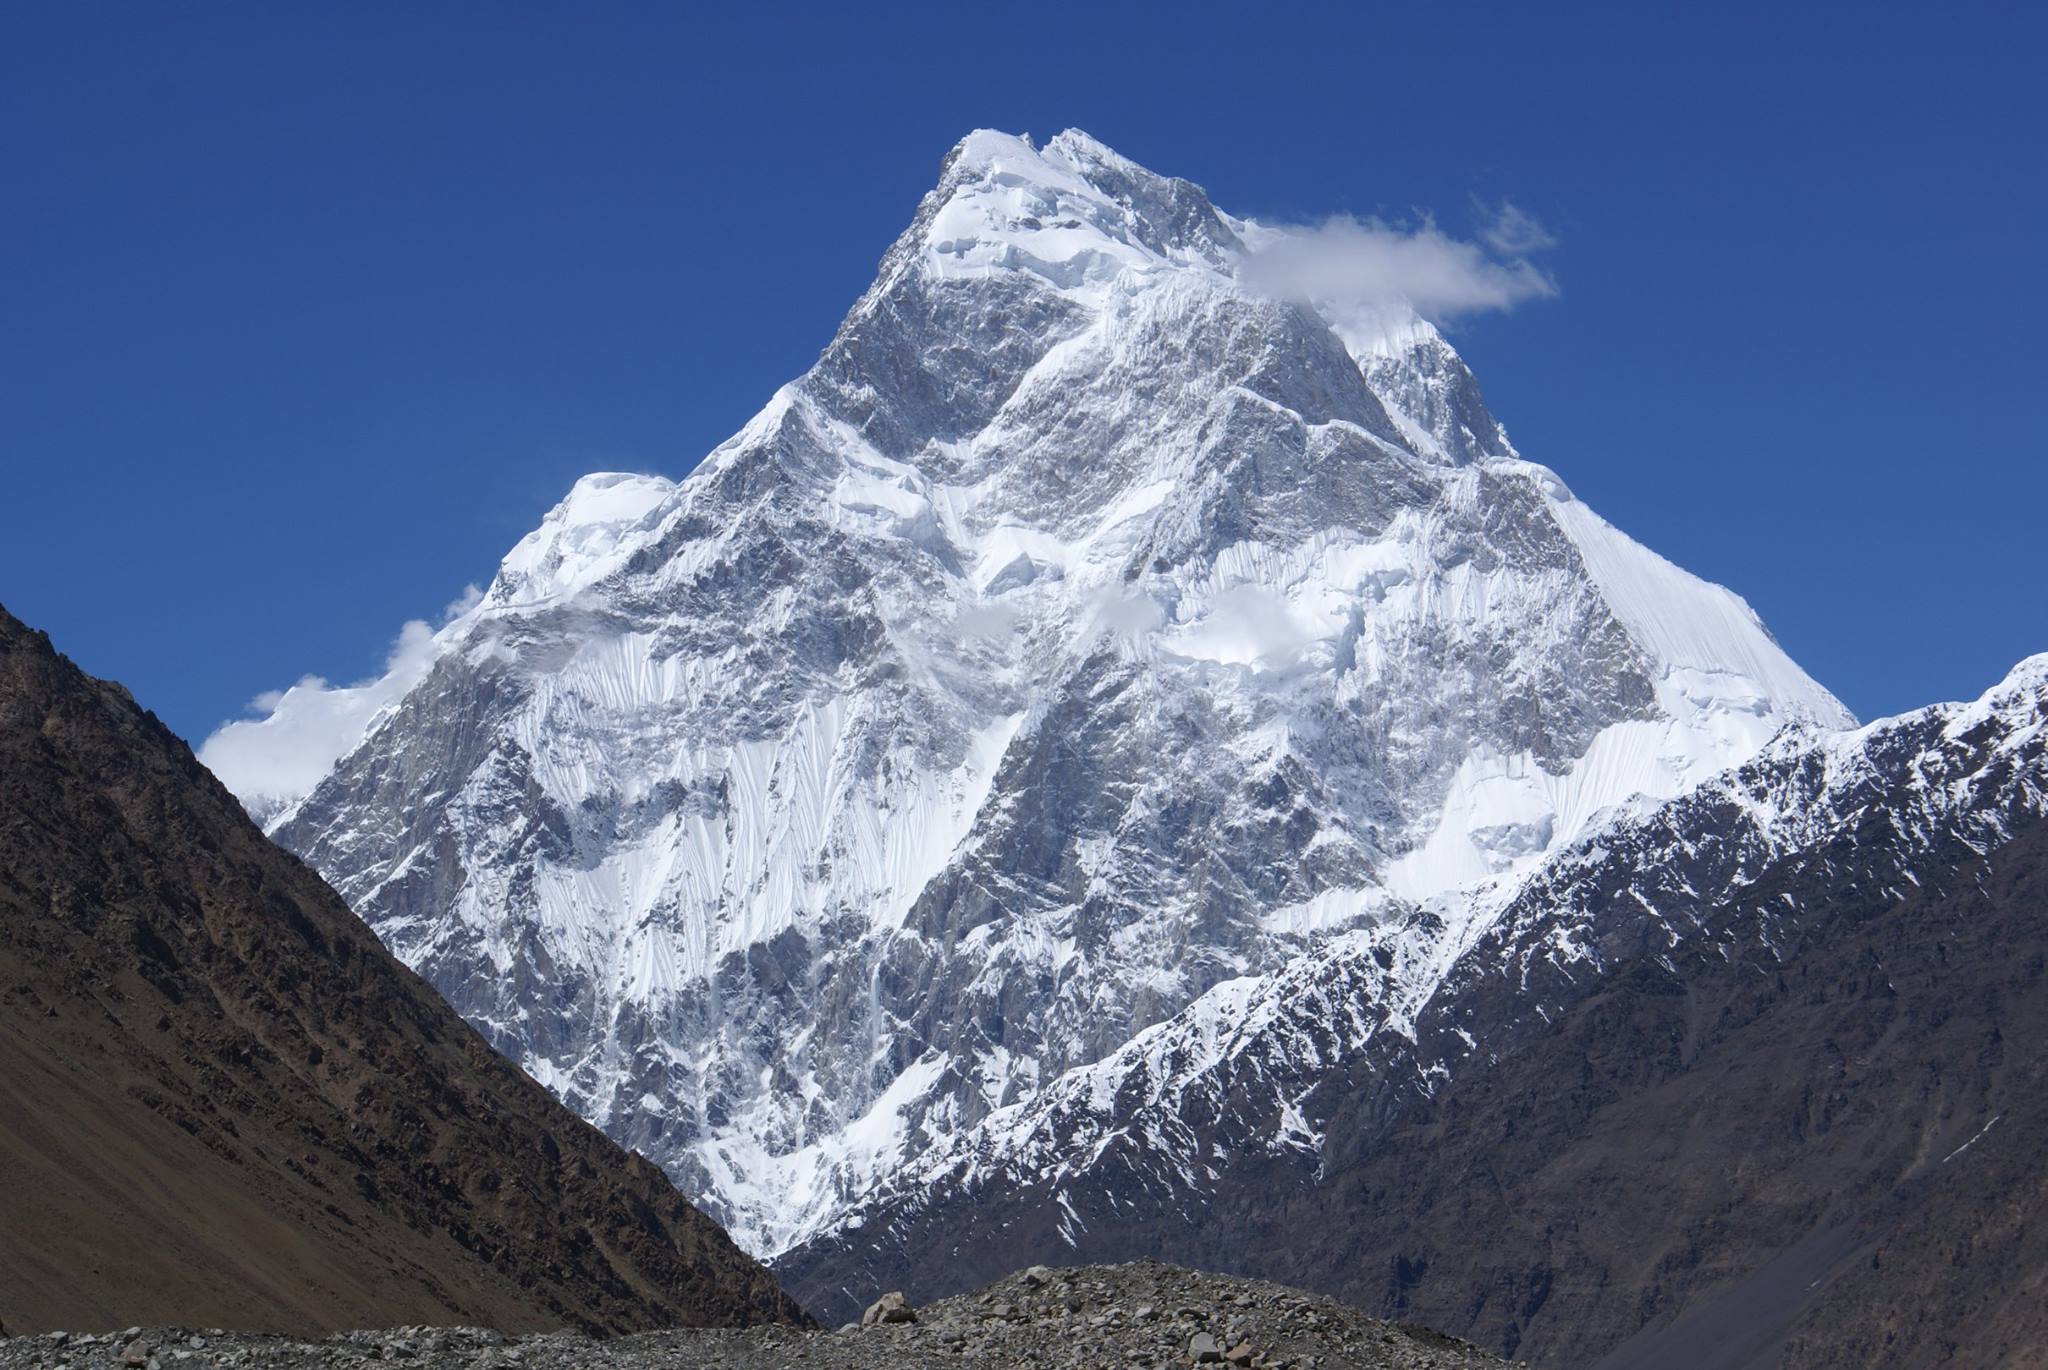 Yukshin Gardan Sar 7460 m Hispar Muztagh Shimshal, Gojal Hunza, Gilgit Baltistan Pakistan. Yukshin Gardan Glacier in Shimshal valley